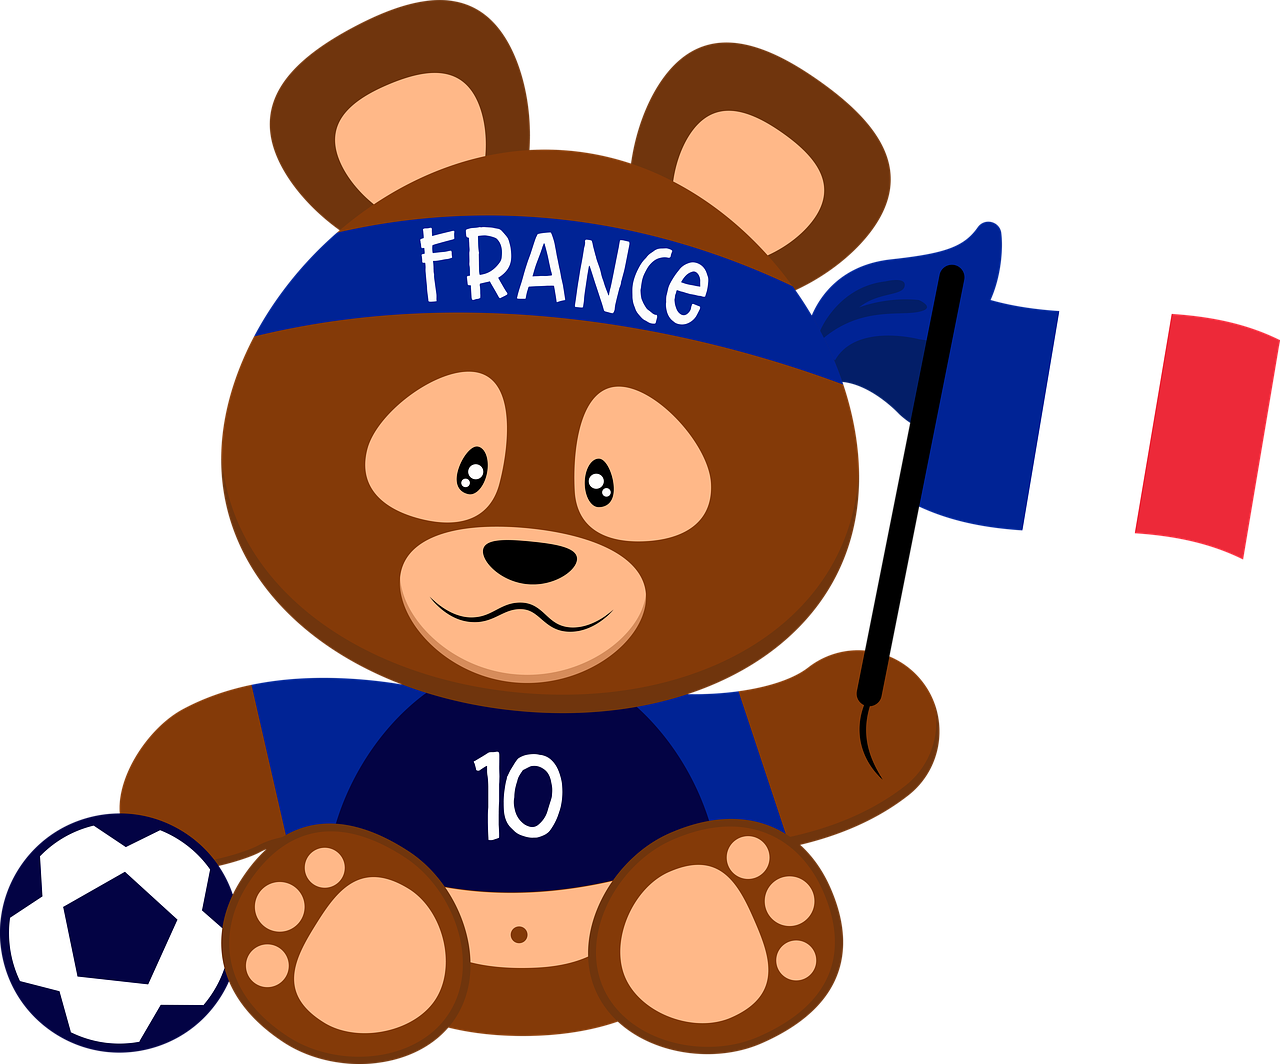 Prancūzija,  Vėliavos Prancūzija,  Prancūzų Kalba,  Futbolas,  Tauta,  Vėliava,  Šalis,  Turnyras,  Raudona,  2018